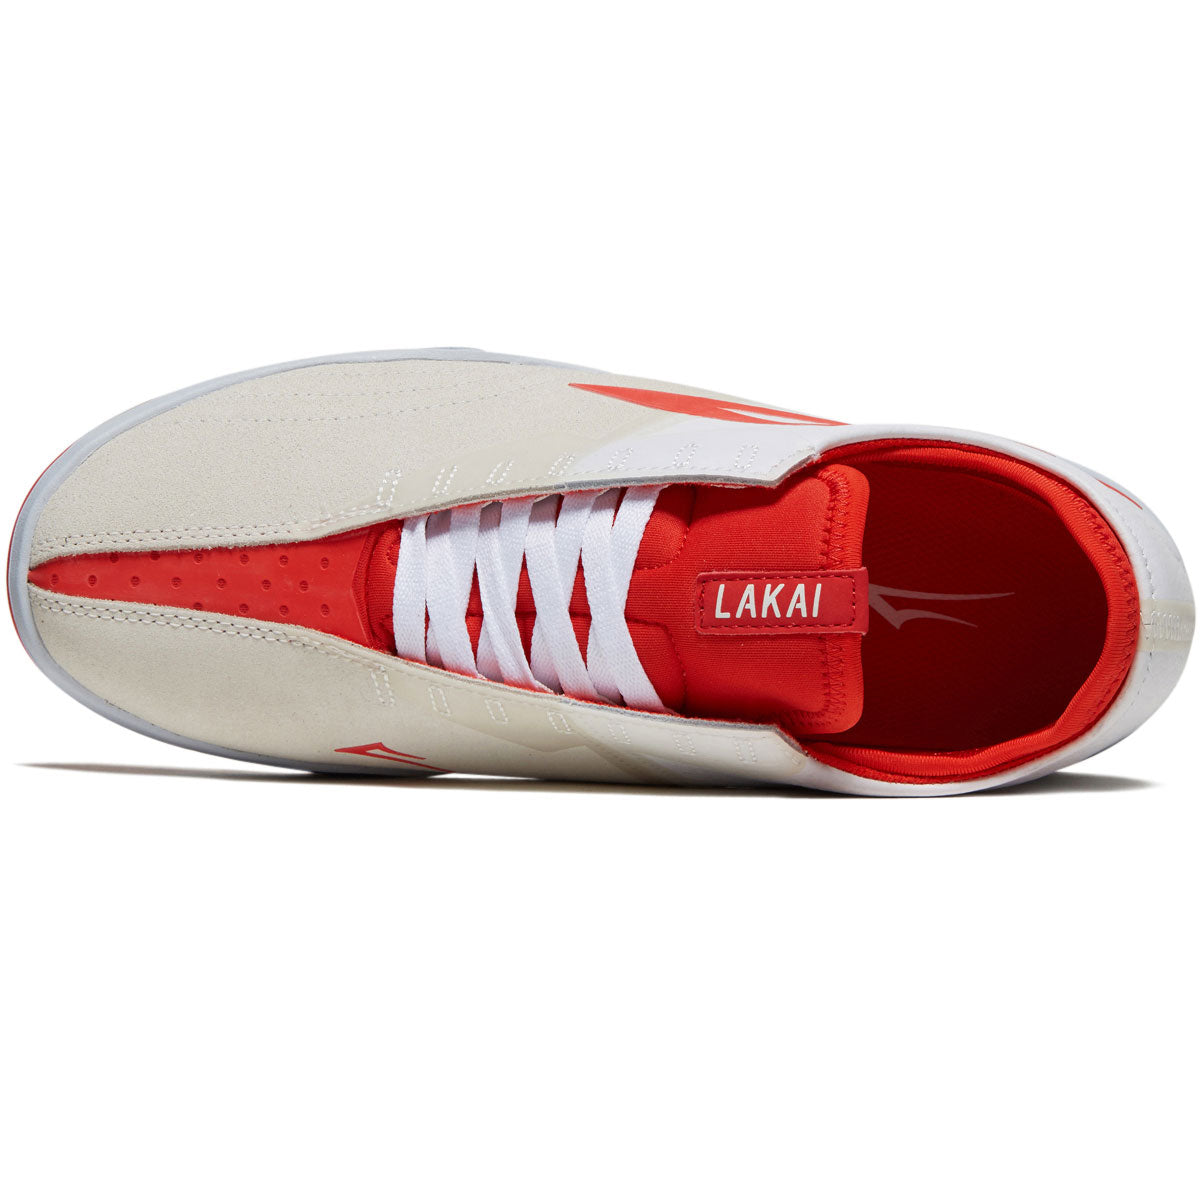 Lakai Mod Shoes - White/Flame Suede image 3